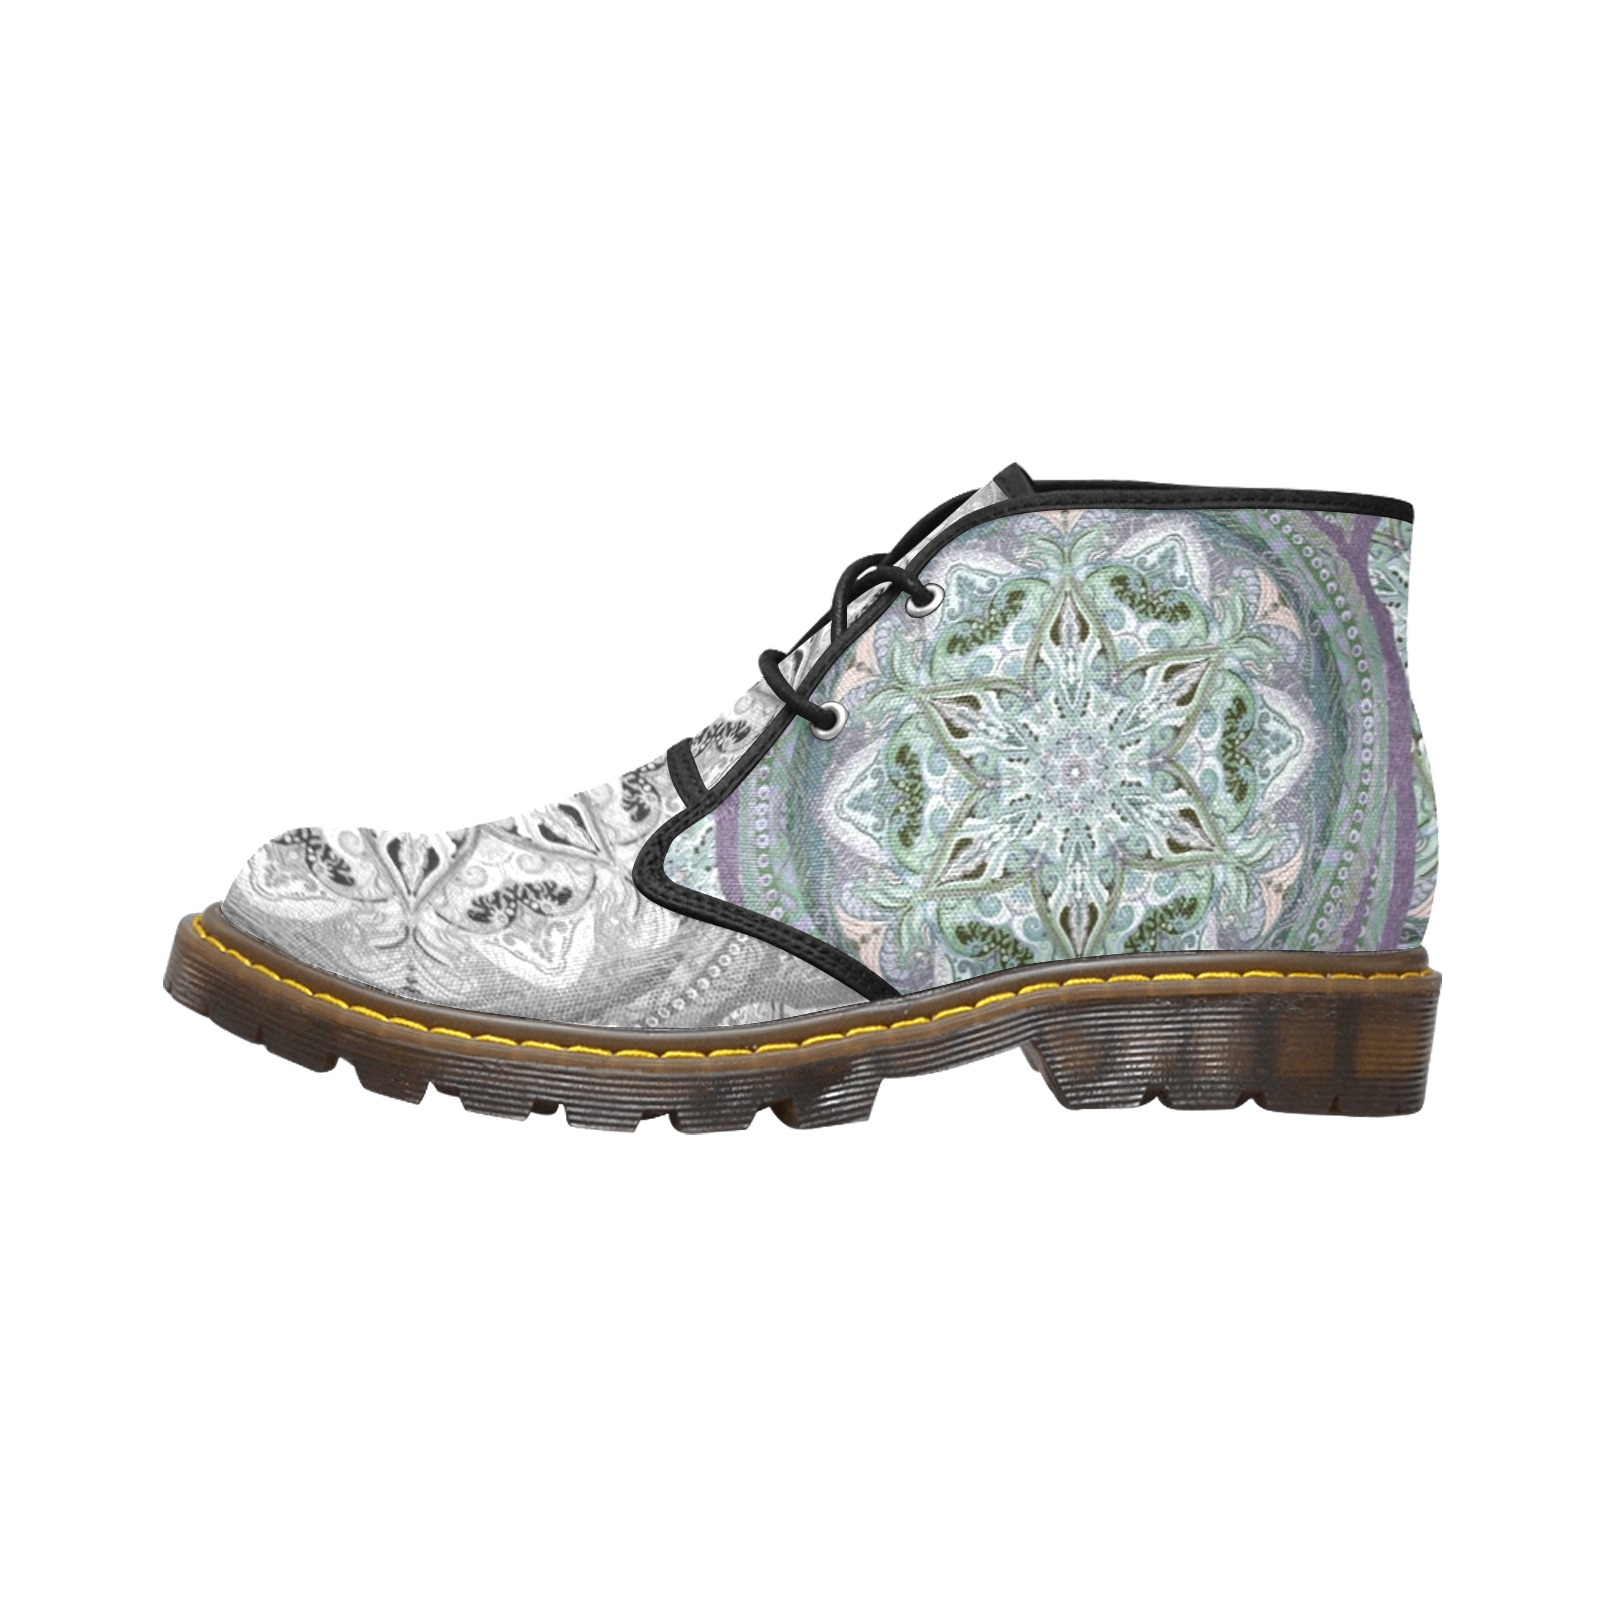 embroidery-gray Women's Canvas Chukka Boots (Model 2402-1)